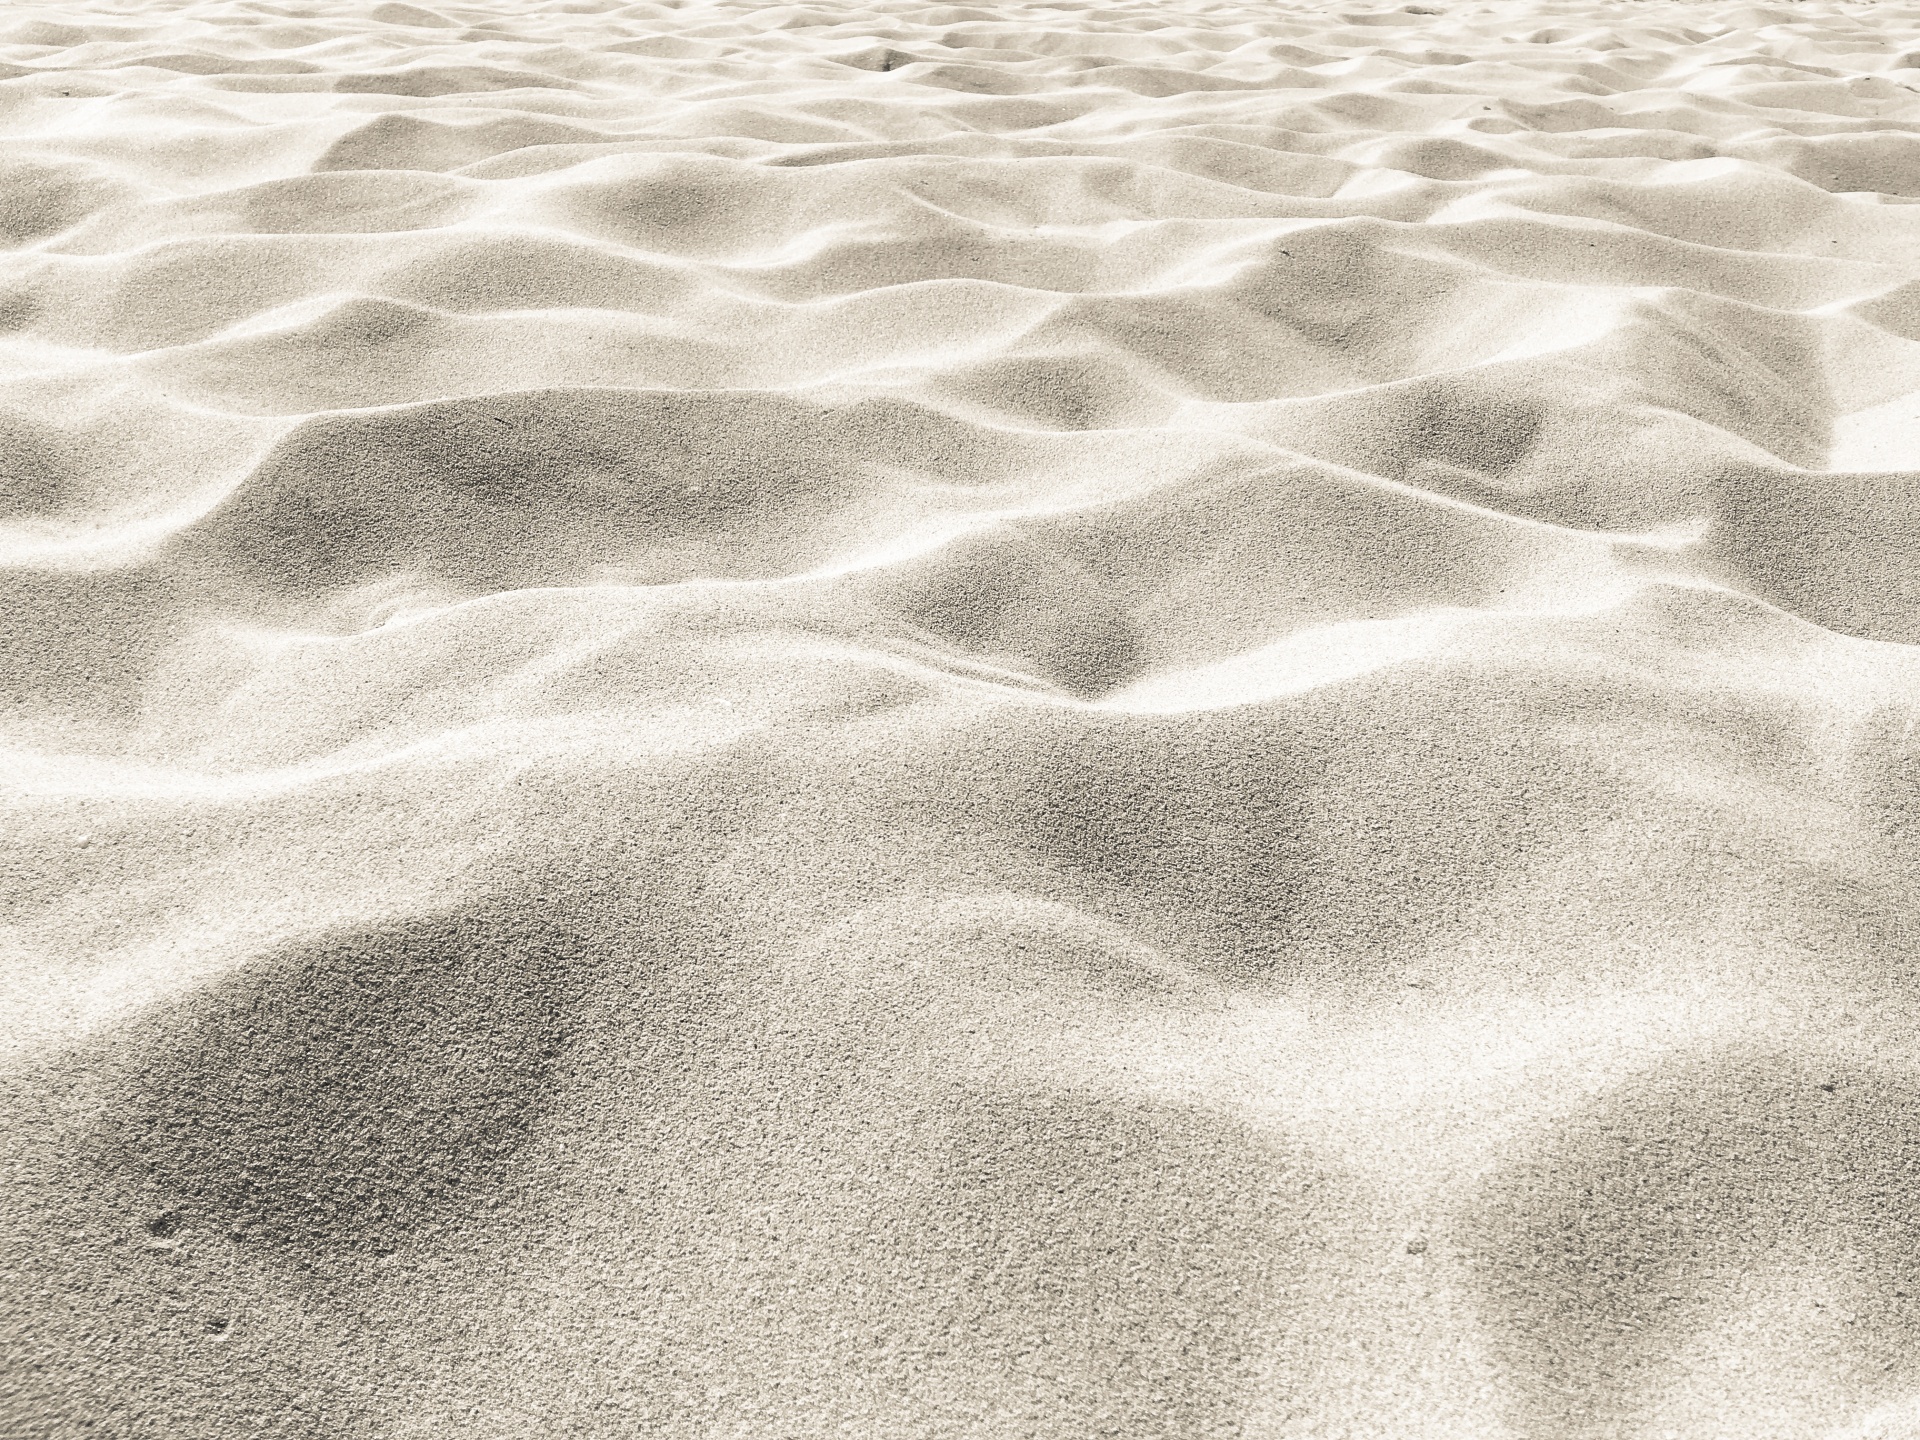 Beach sand photo